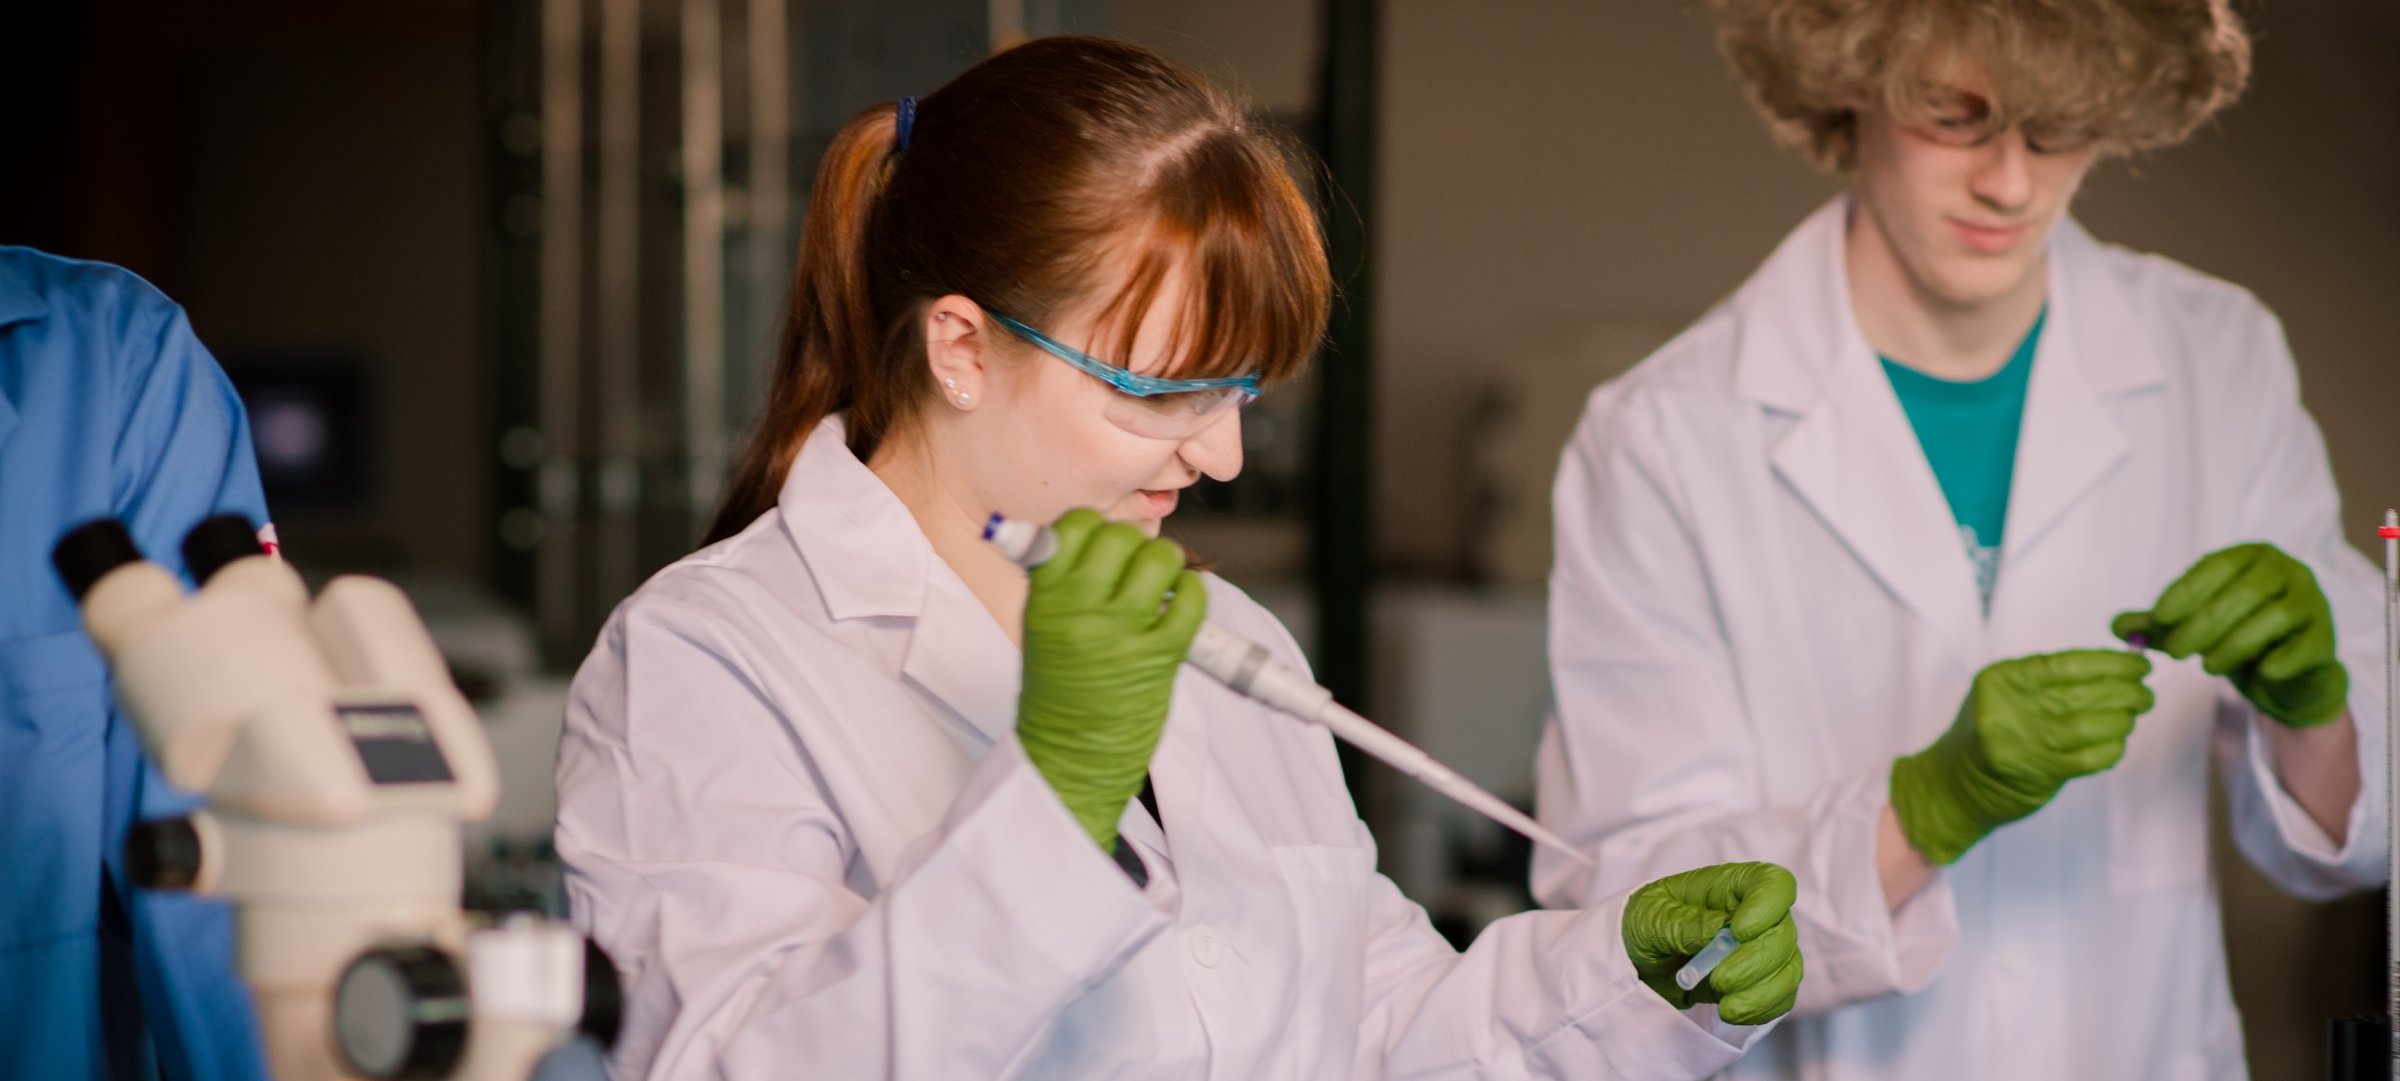 Three students, wearing lab coats, working in a bioinformatics laboratory